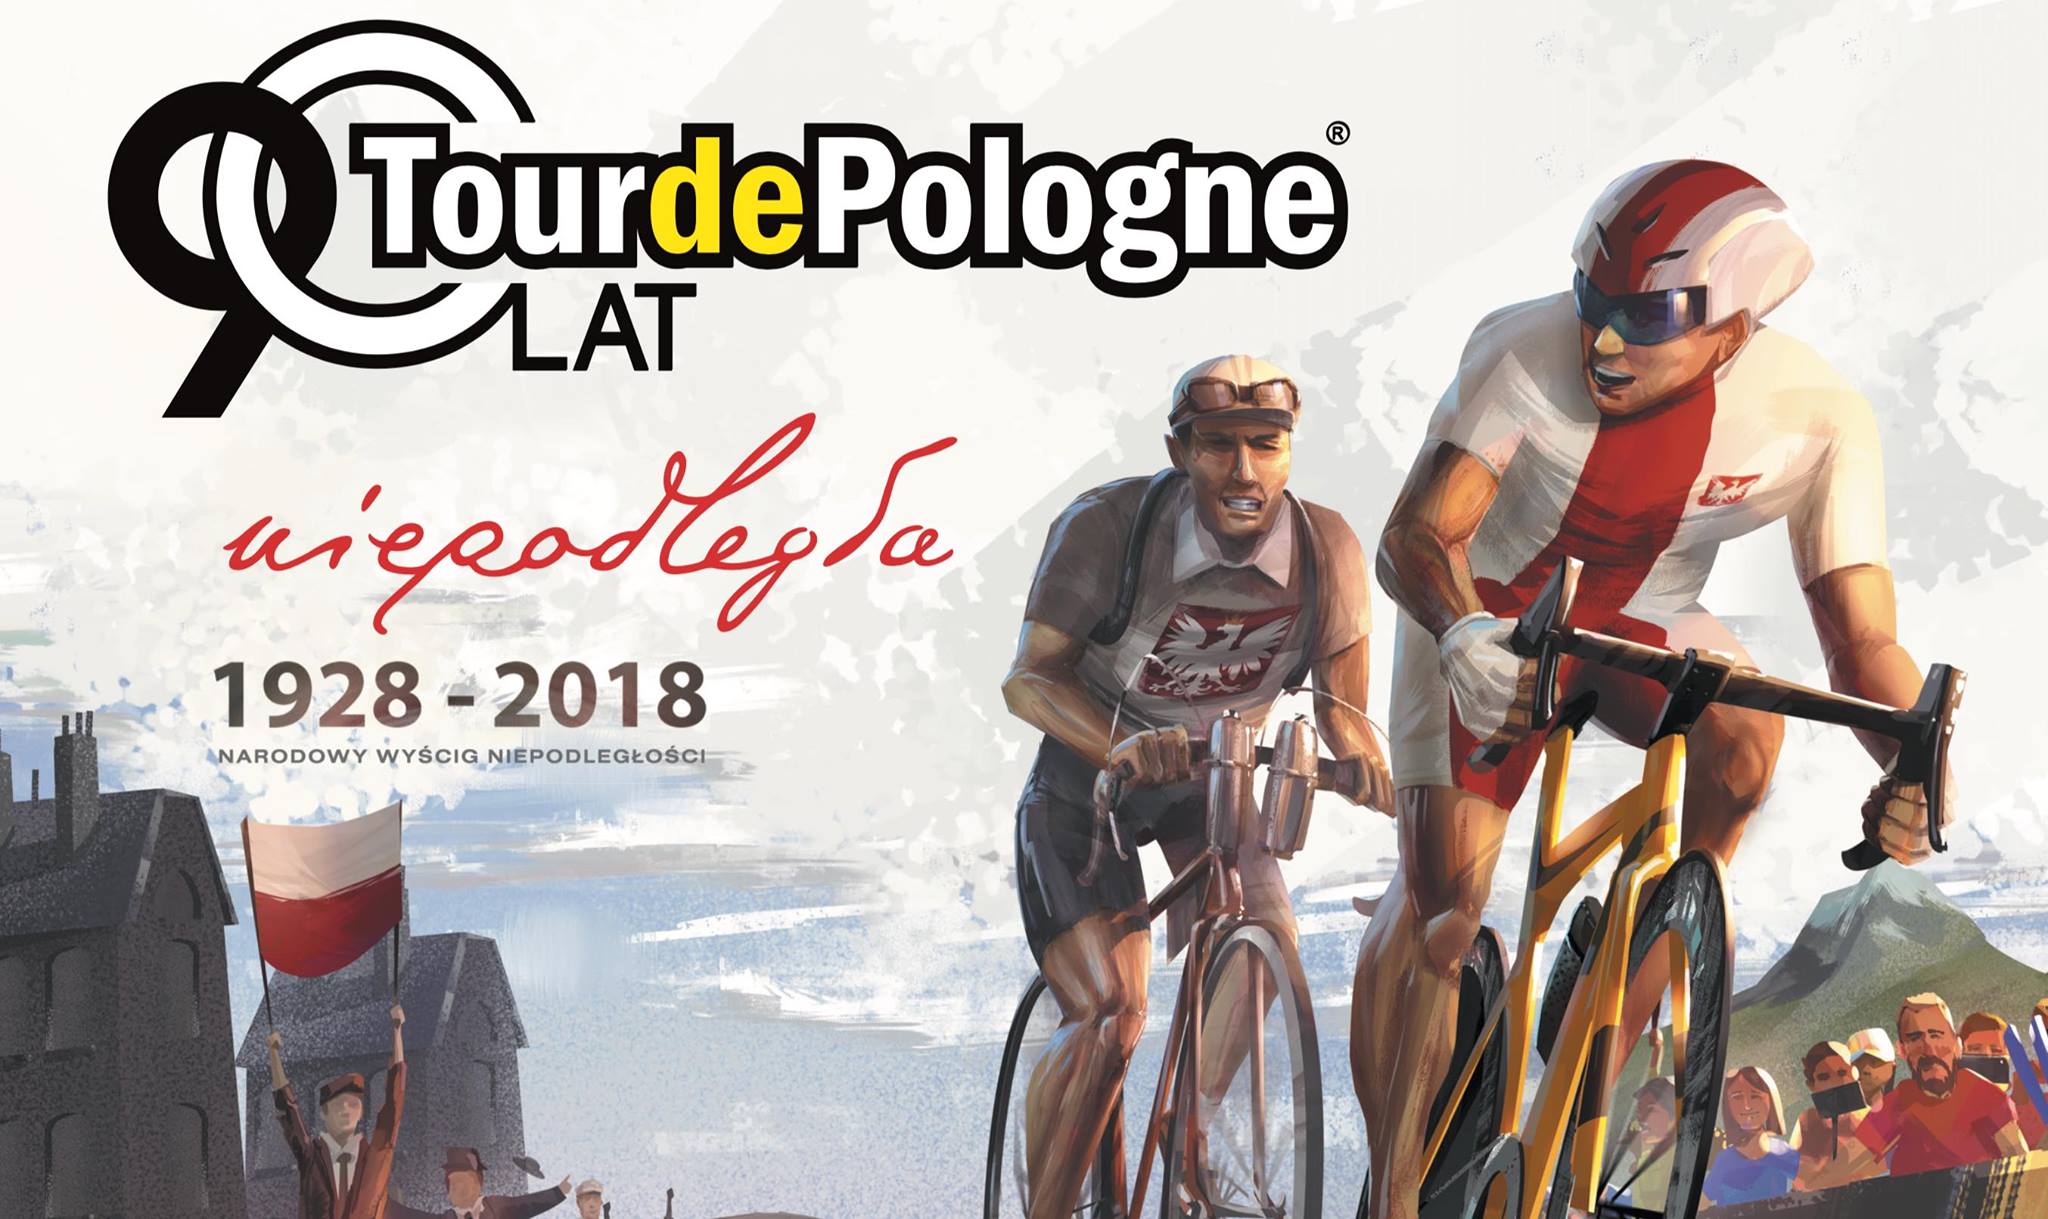 Trasa Tour de Pologne 2018 zaprezentowana